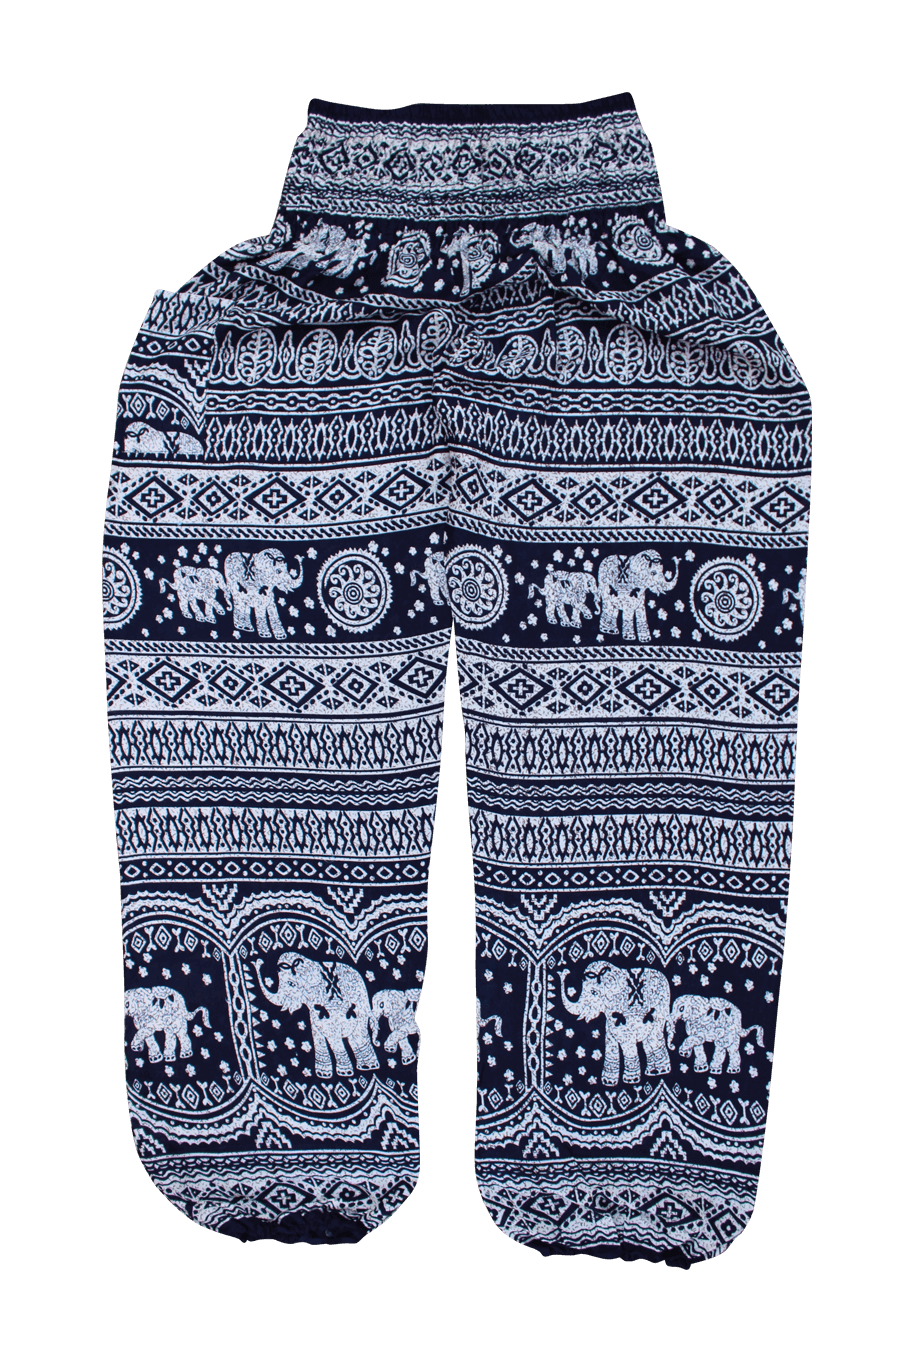 Khema Elephant Harem Pants from Bohemian Island